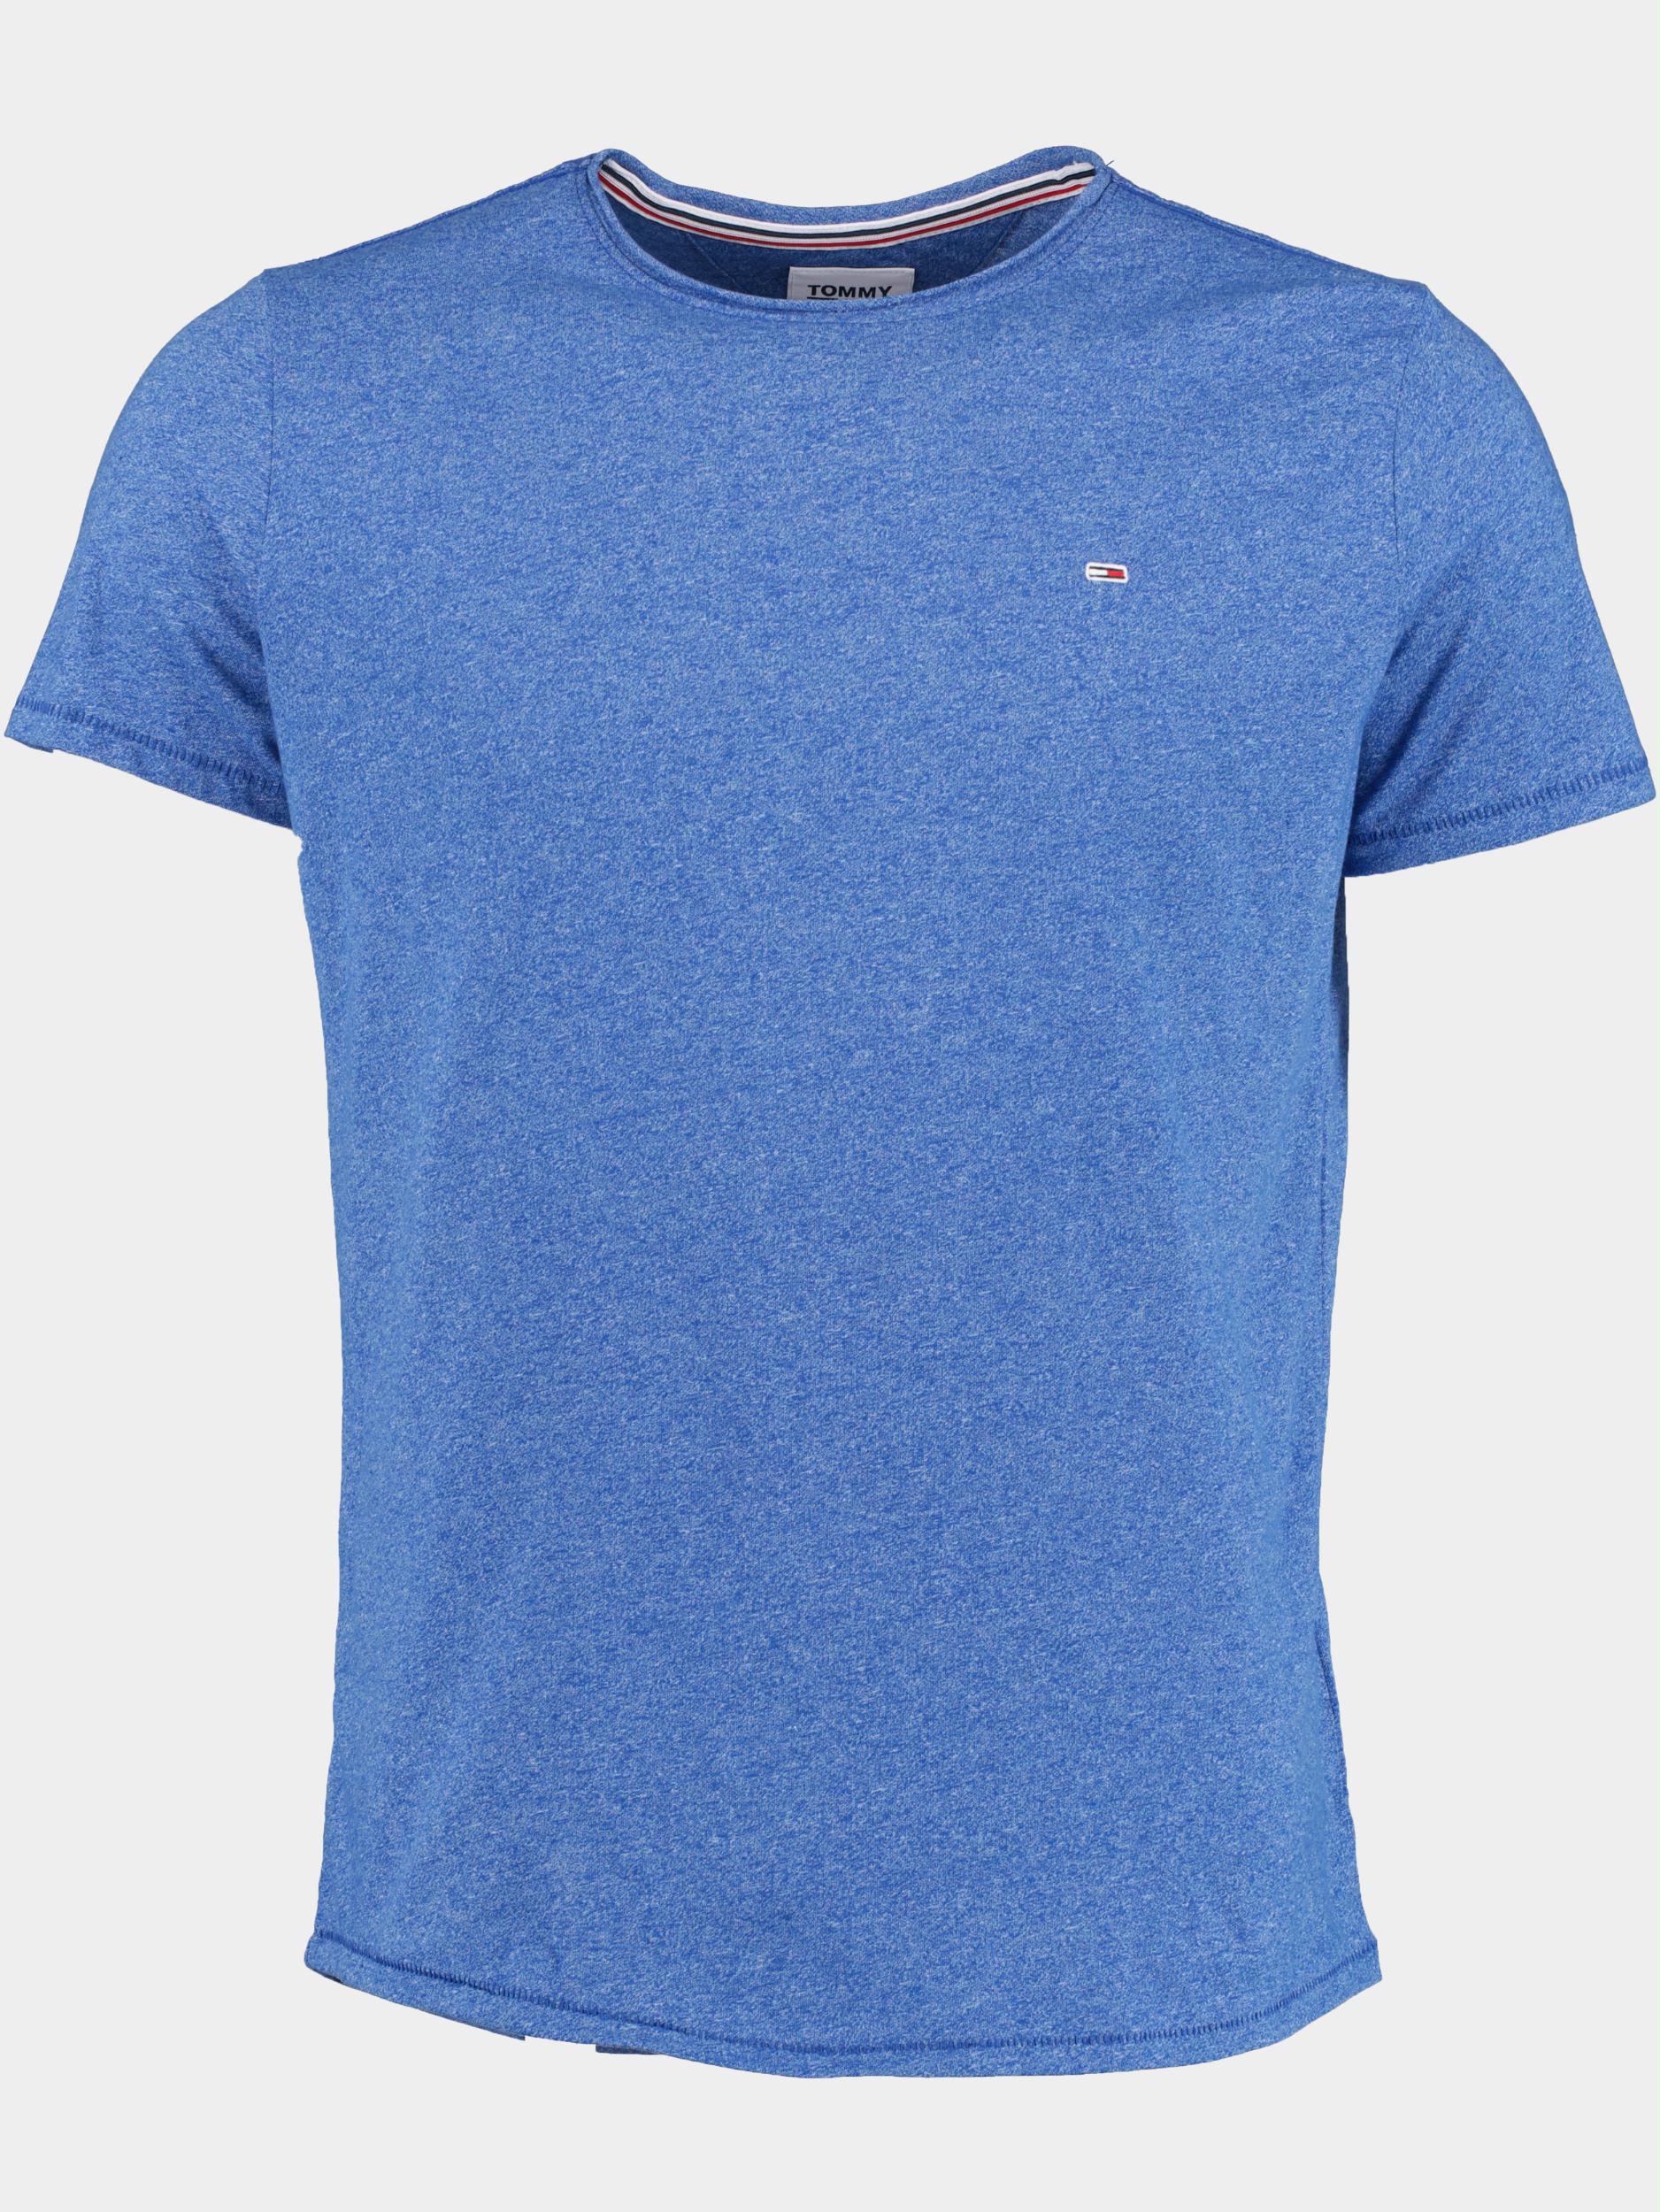 Tommy Jeans T-shirt korte mouw Blauw TJM Slim jaspe c neck DM0DM09586/C66